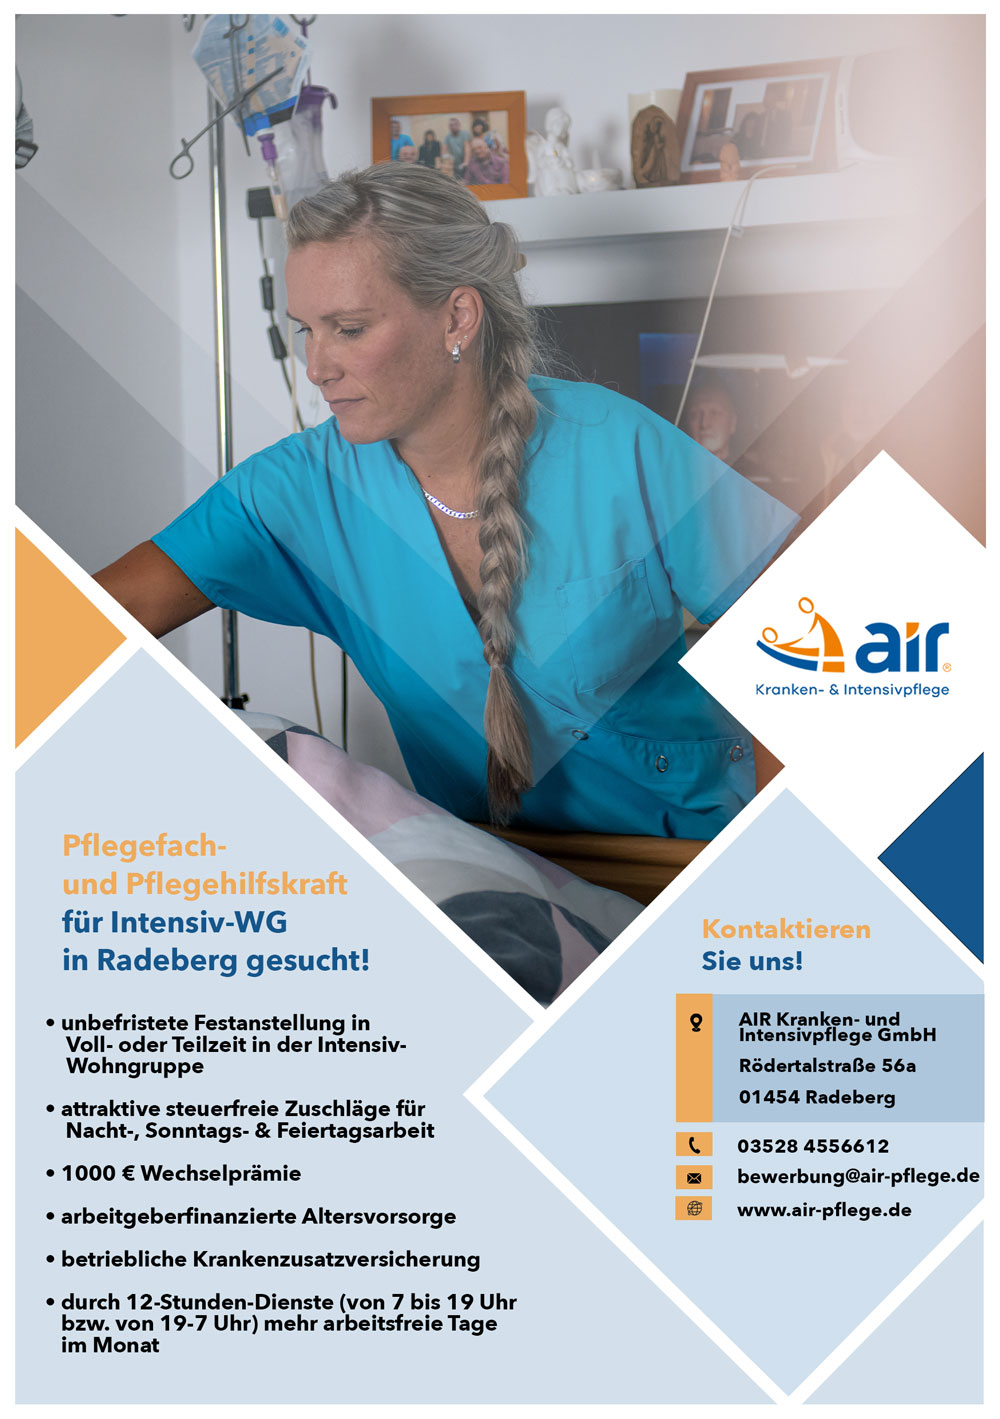 AIR-Pflegefachkraft-Radeberg-intensiv